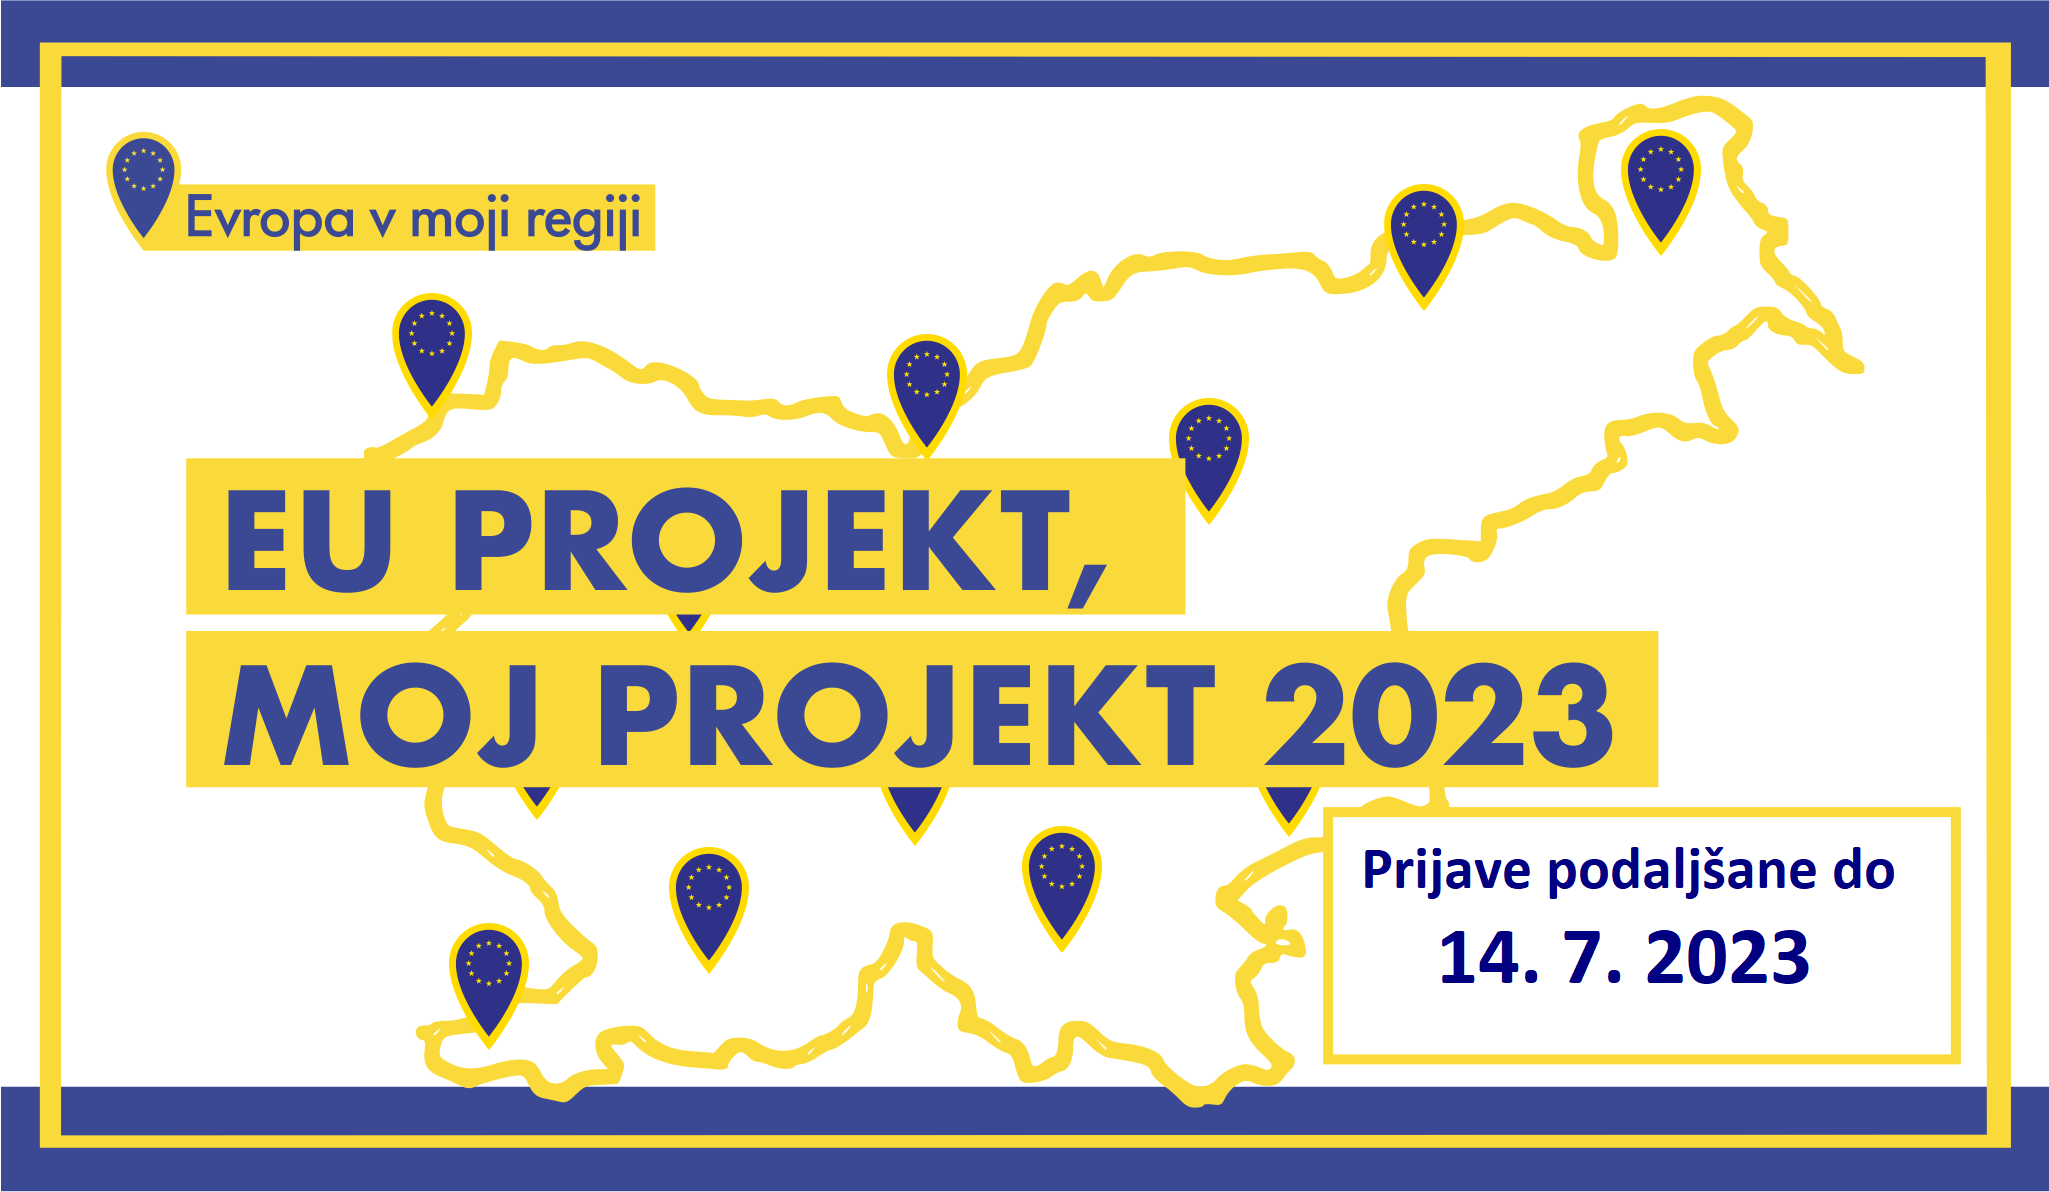 slika prikazuje zemljevid Slovenije s povabilom k prijavi na EU projekt, moj projekt 2023 do 14. julija.